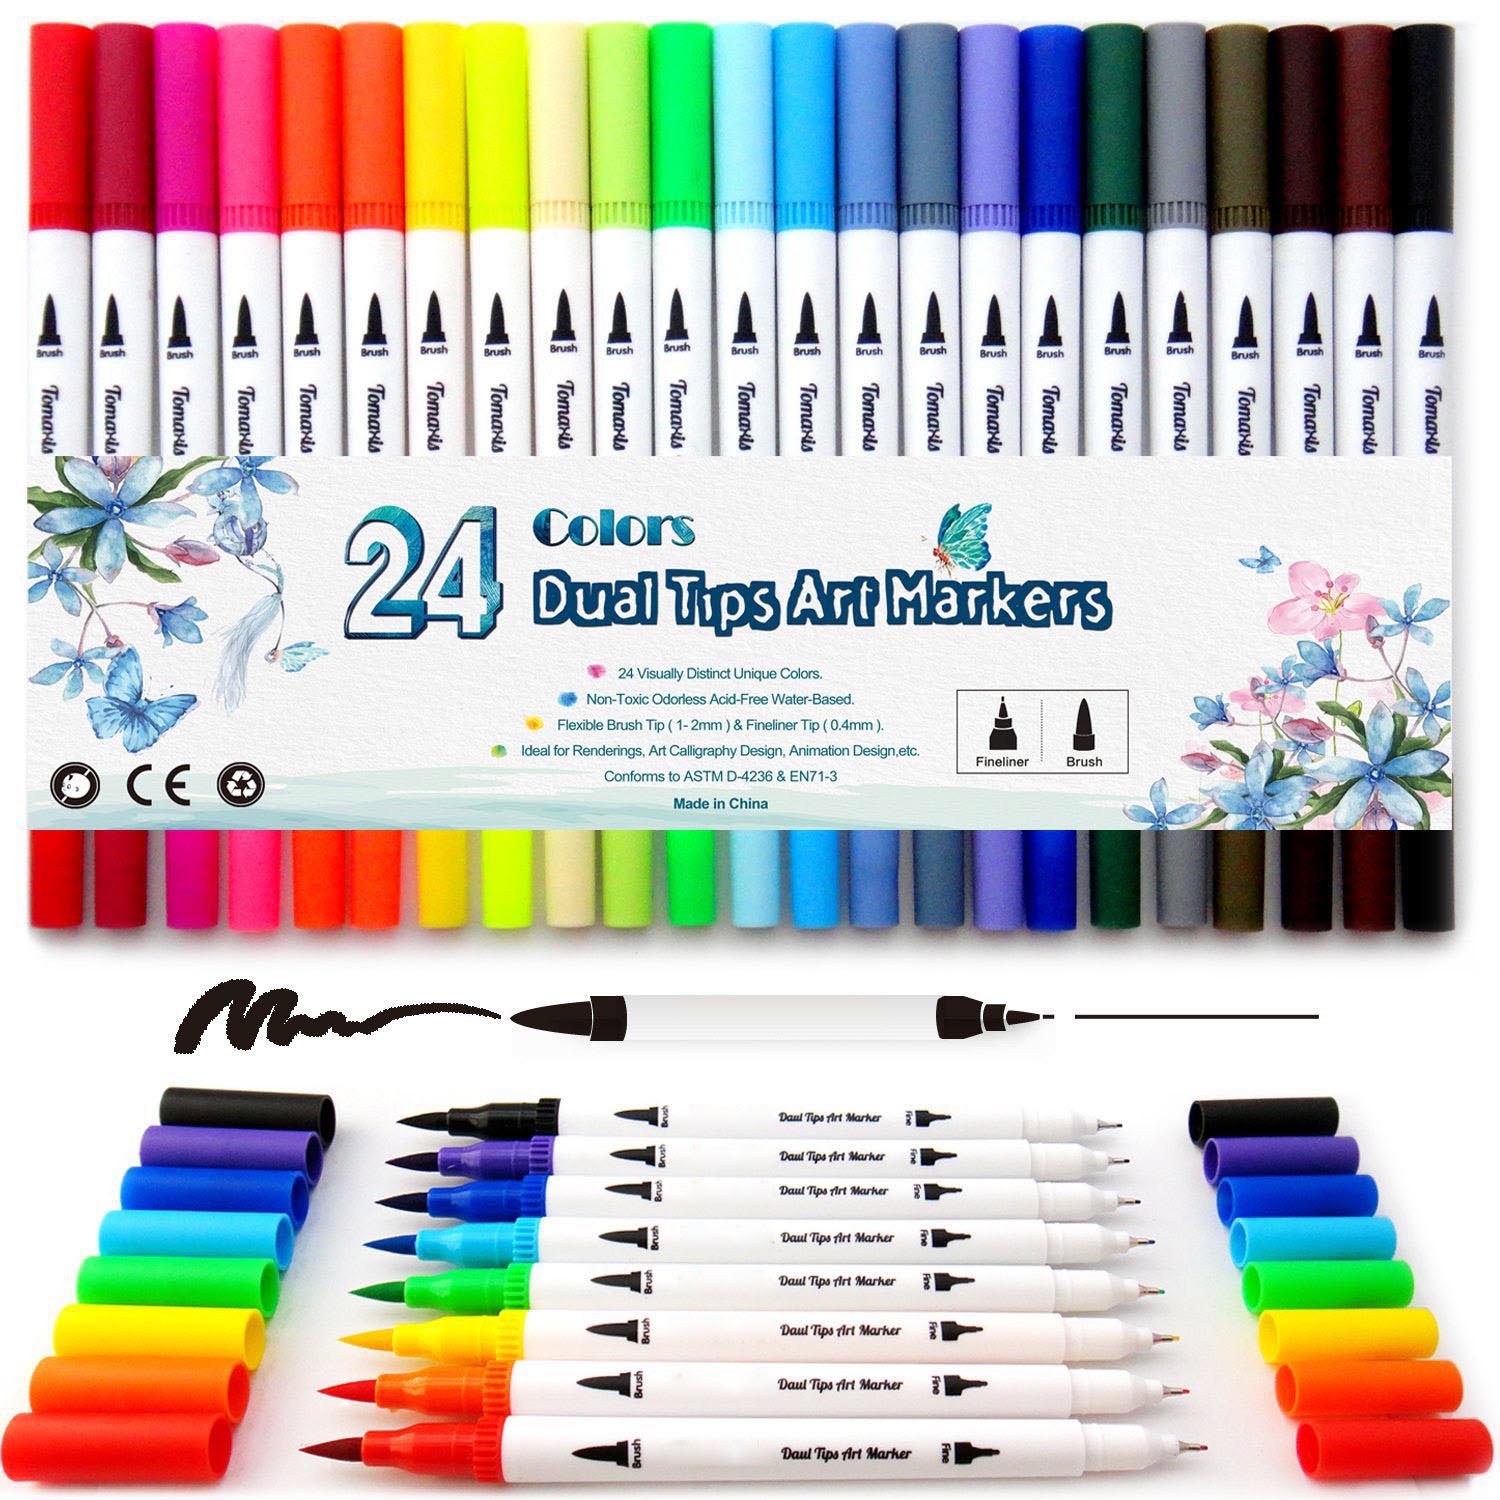 24 colors dual tips brush marker pen